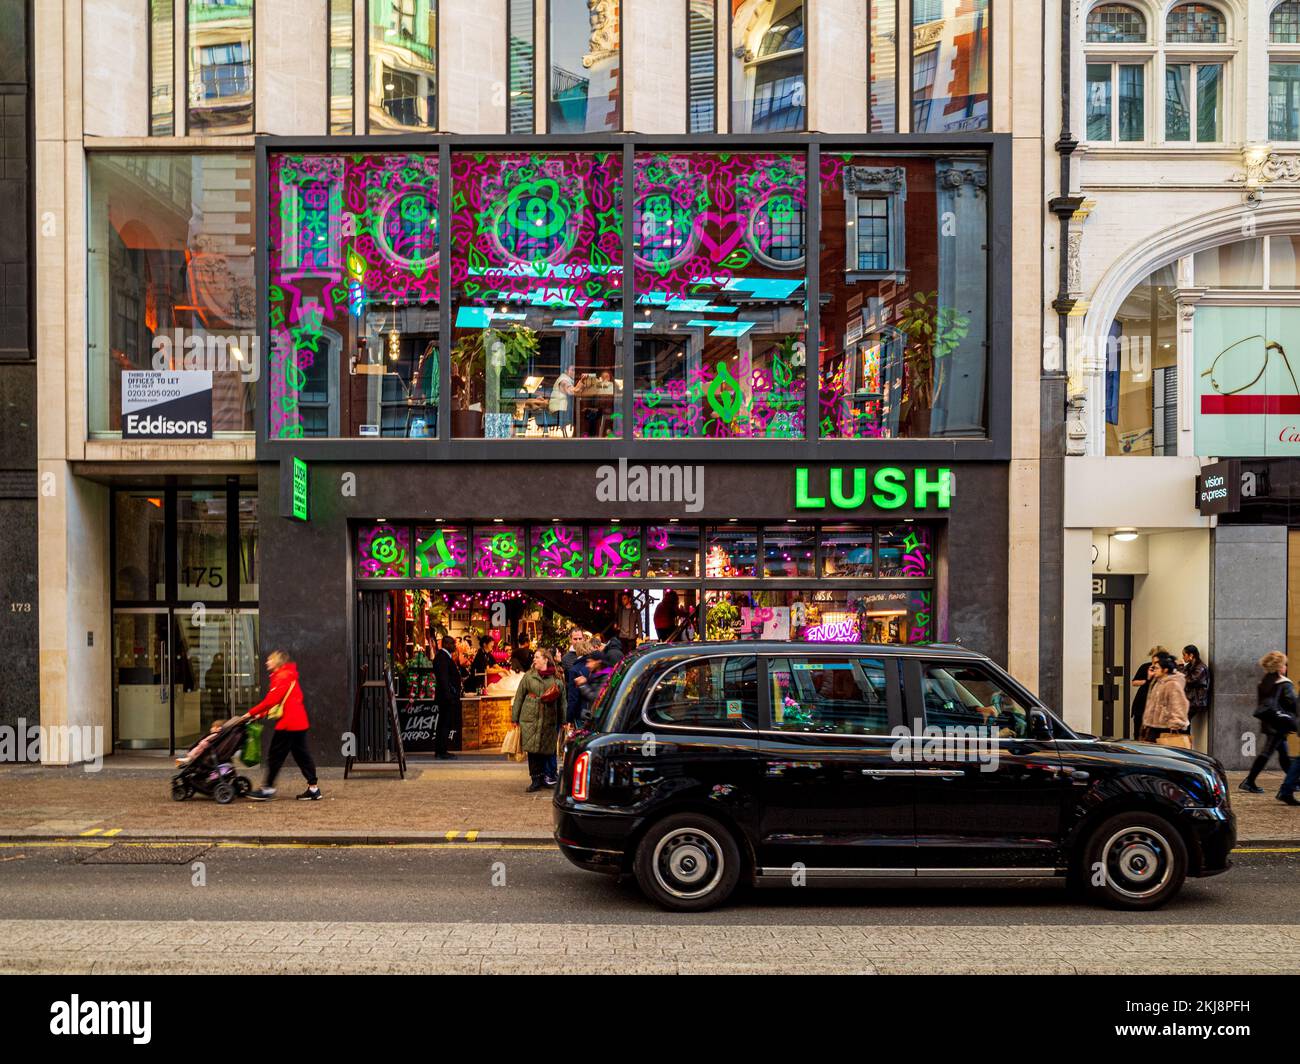 Exlush Spa Oxford Street London: La tienda insignia Exlush Store en Oxford St Central London, con tiendas y spa. Lush fue fundada en 1995. Foto de stock